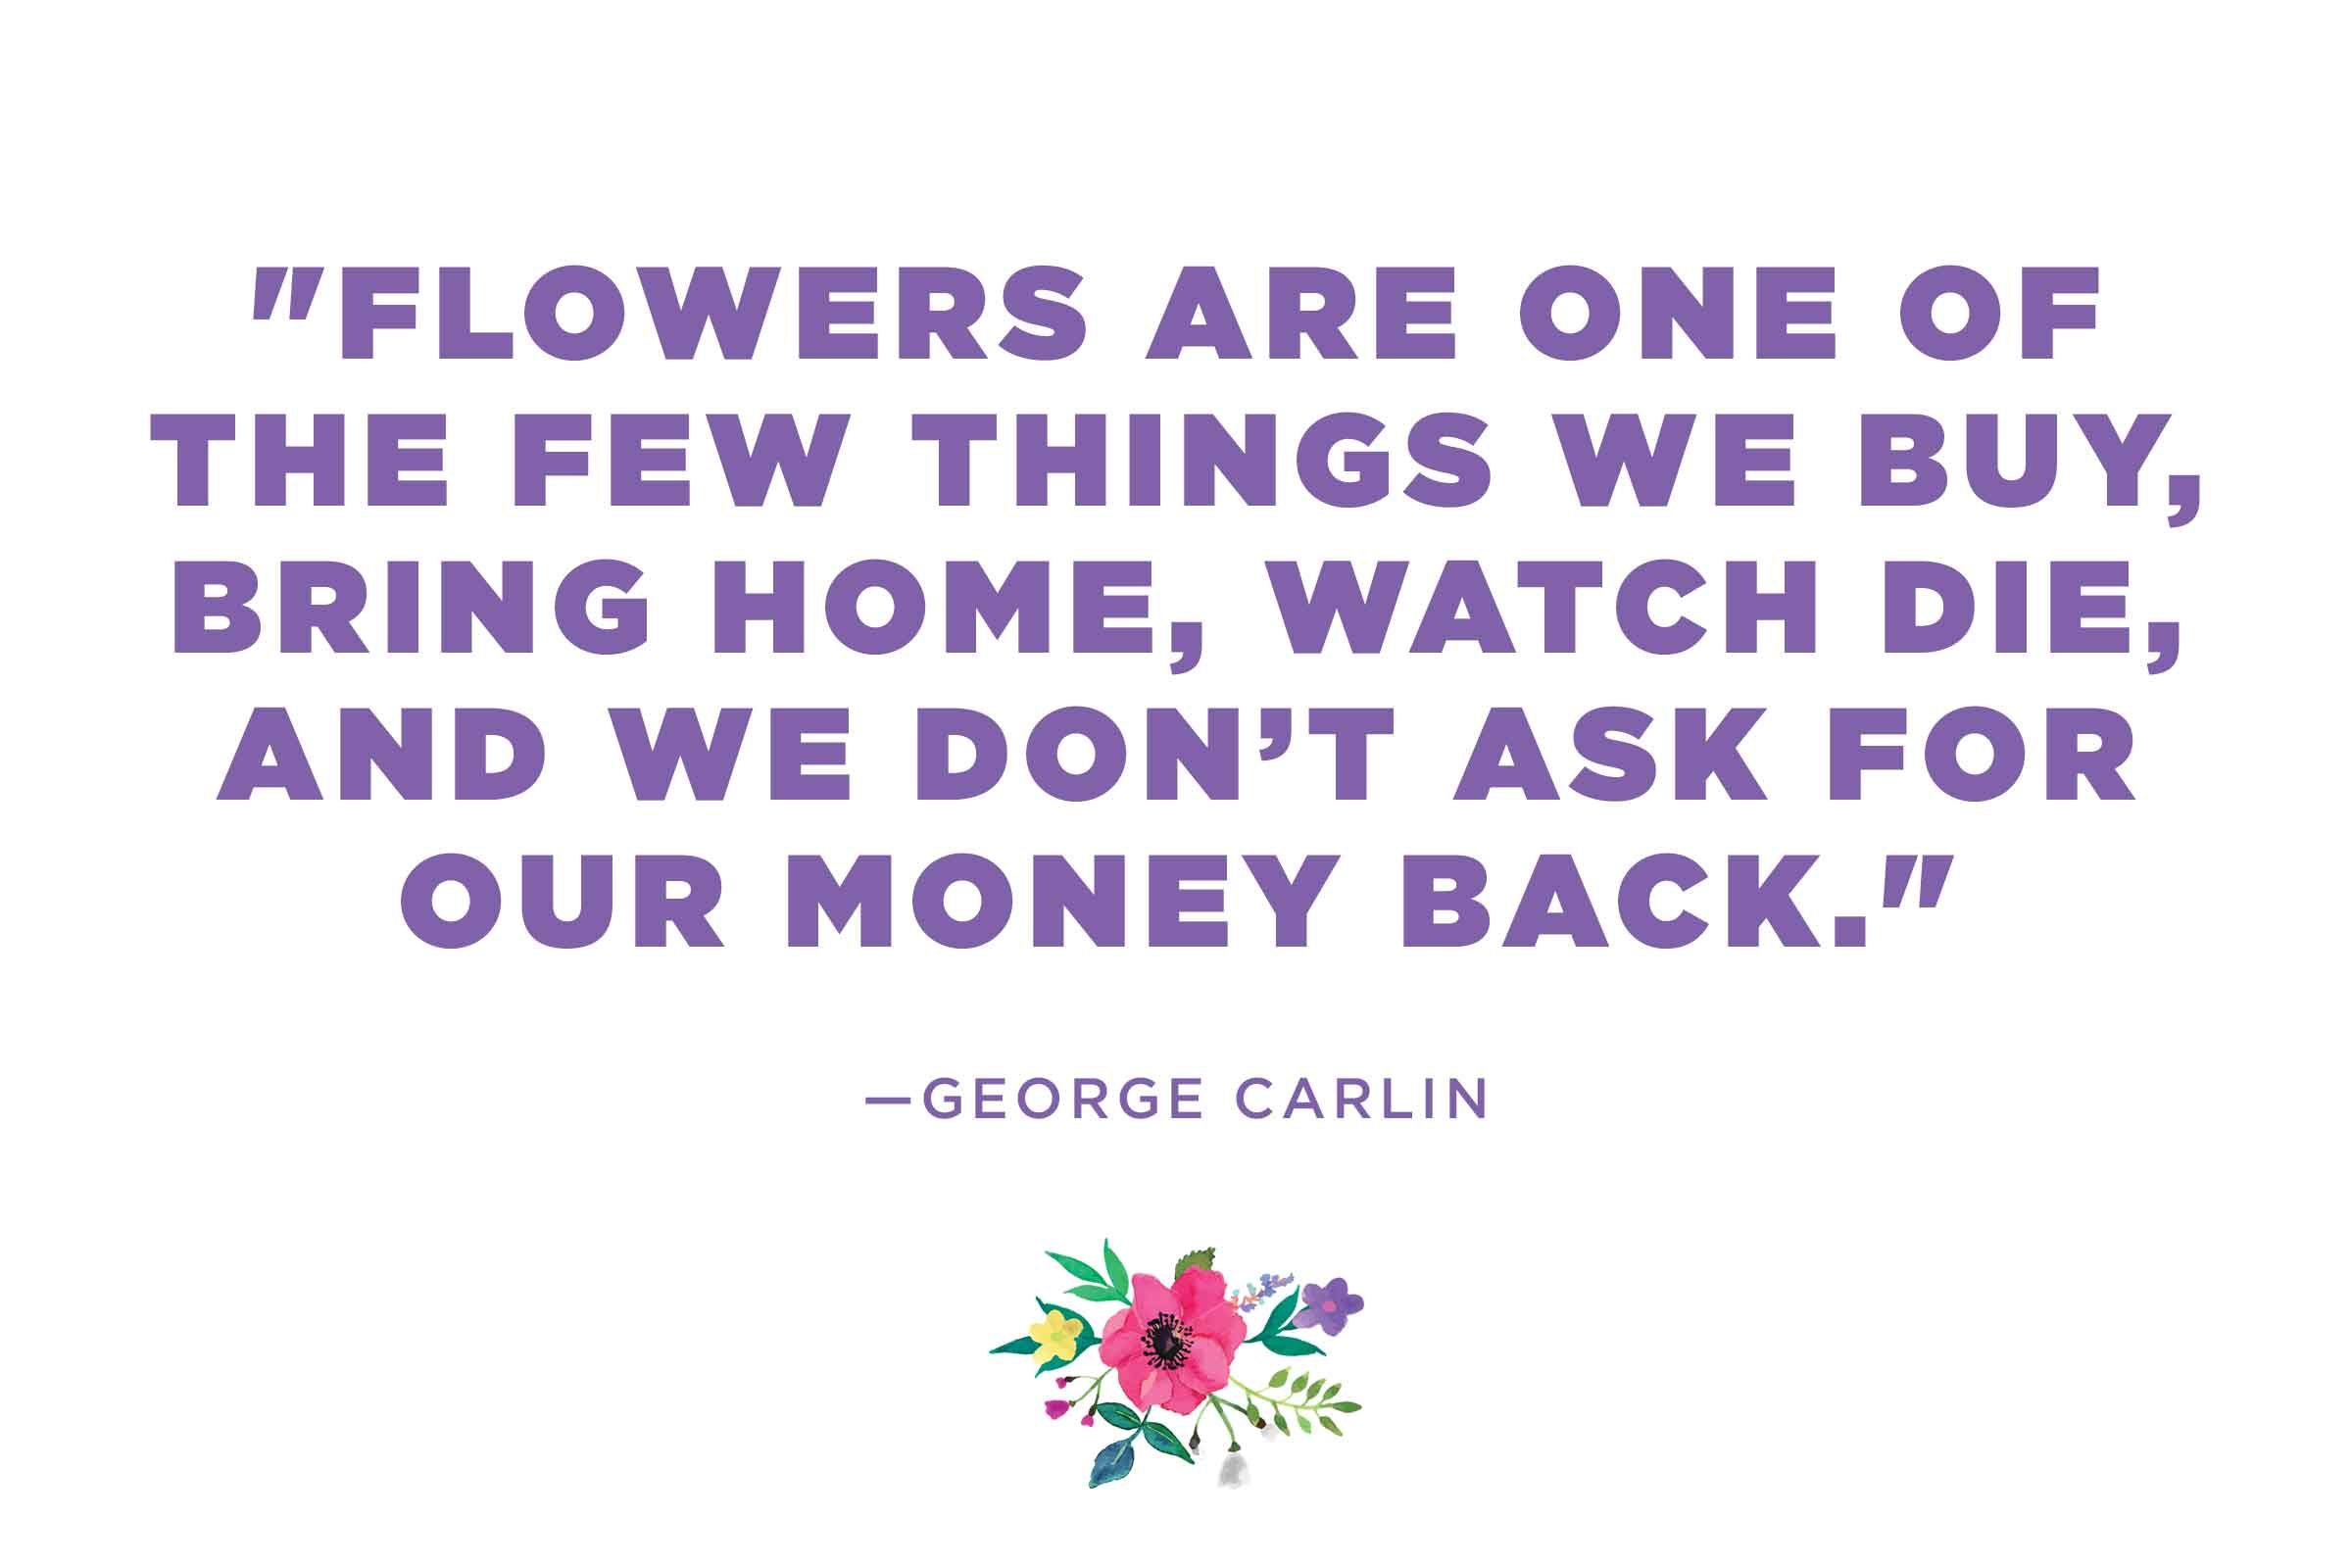 George Carlin on the flower paradox